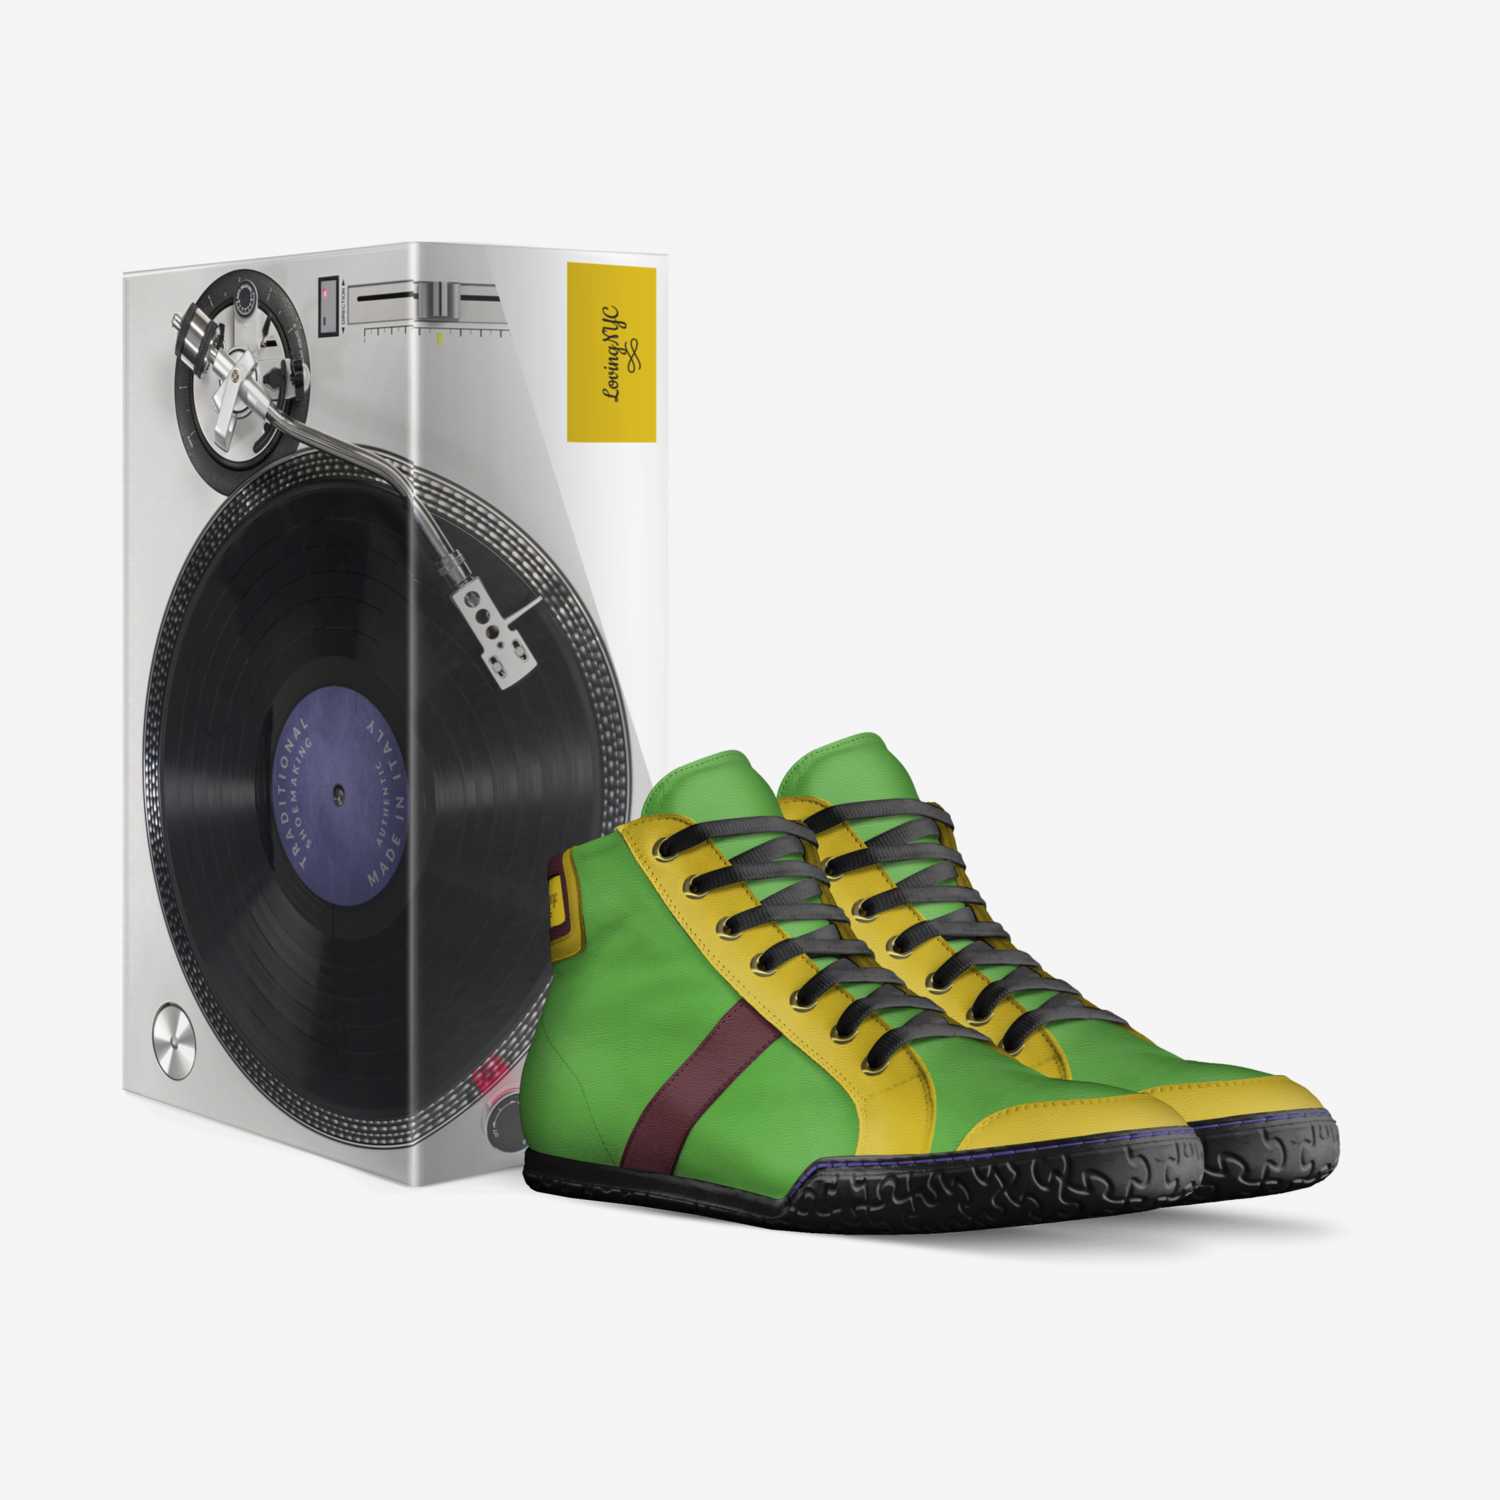 LovingNYC custom made in Italy shoes by Angela Theresa Egic | Box view